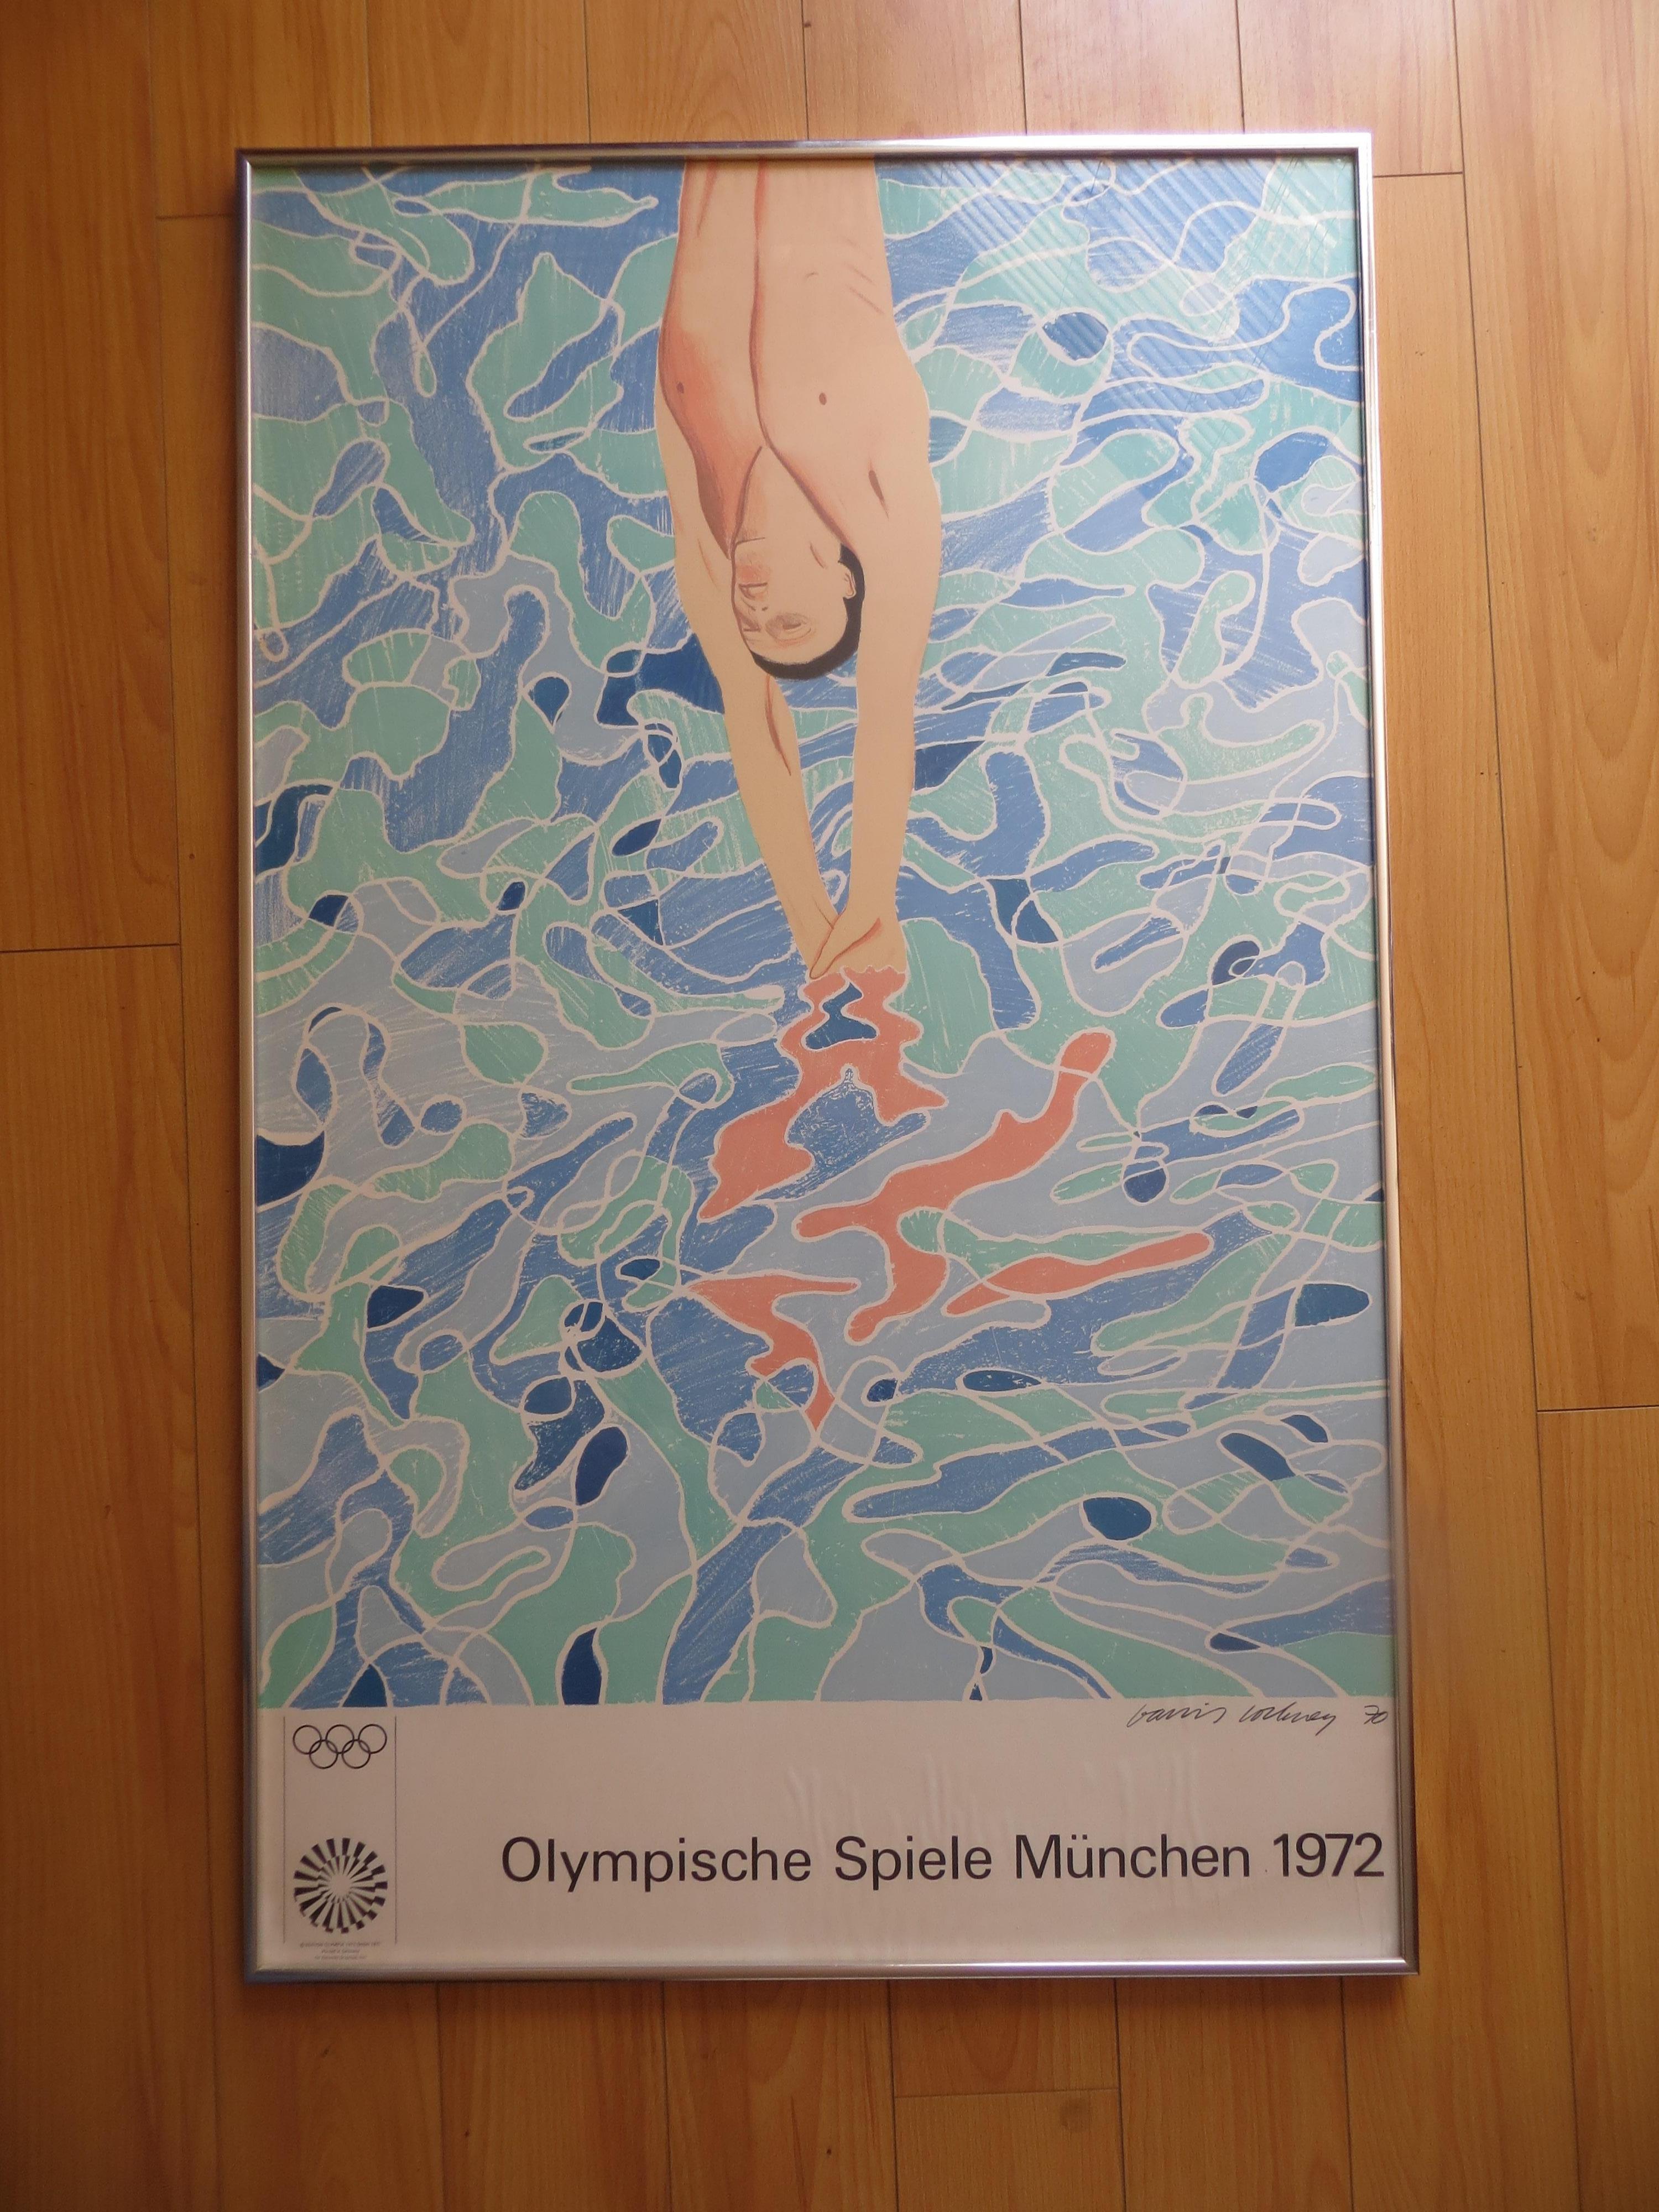 (after) David Hockney Figurative Print - David Hockney, Olympishe Spiele Munchen  Print  Poster, 1972 